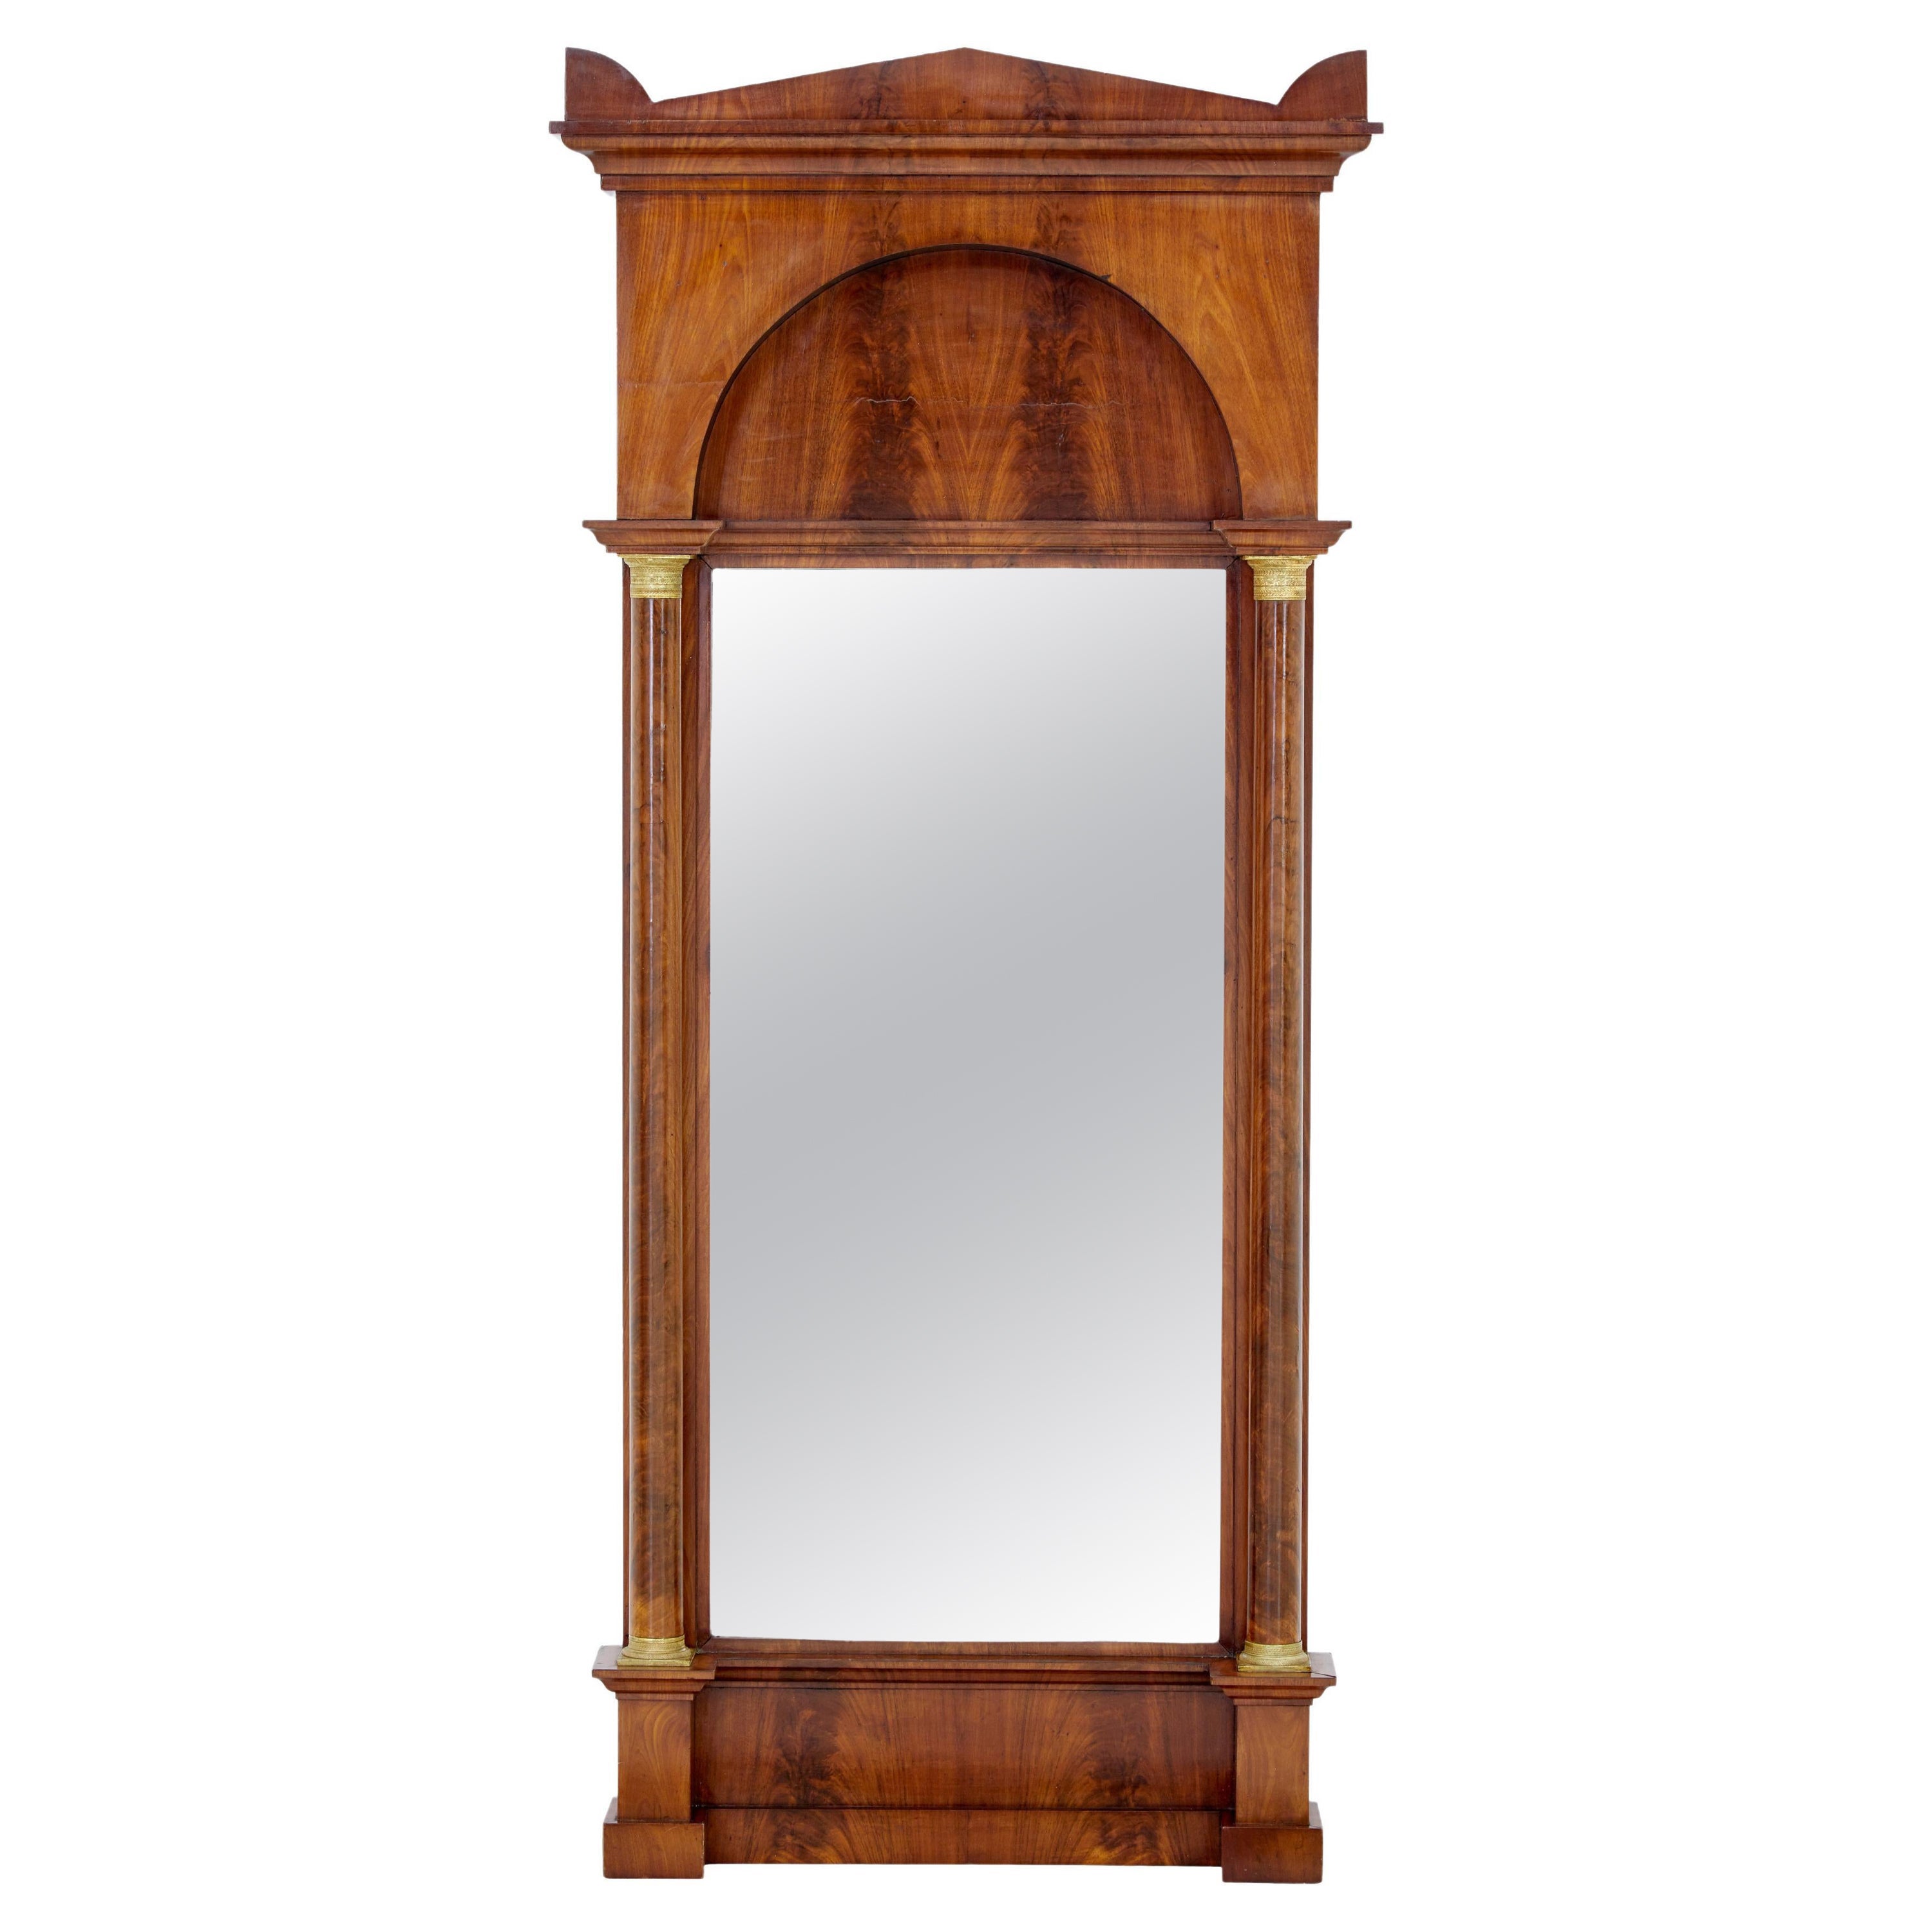 19th Century empire revival mahogany pier mirror